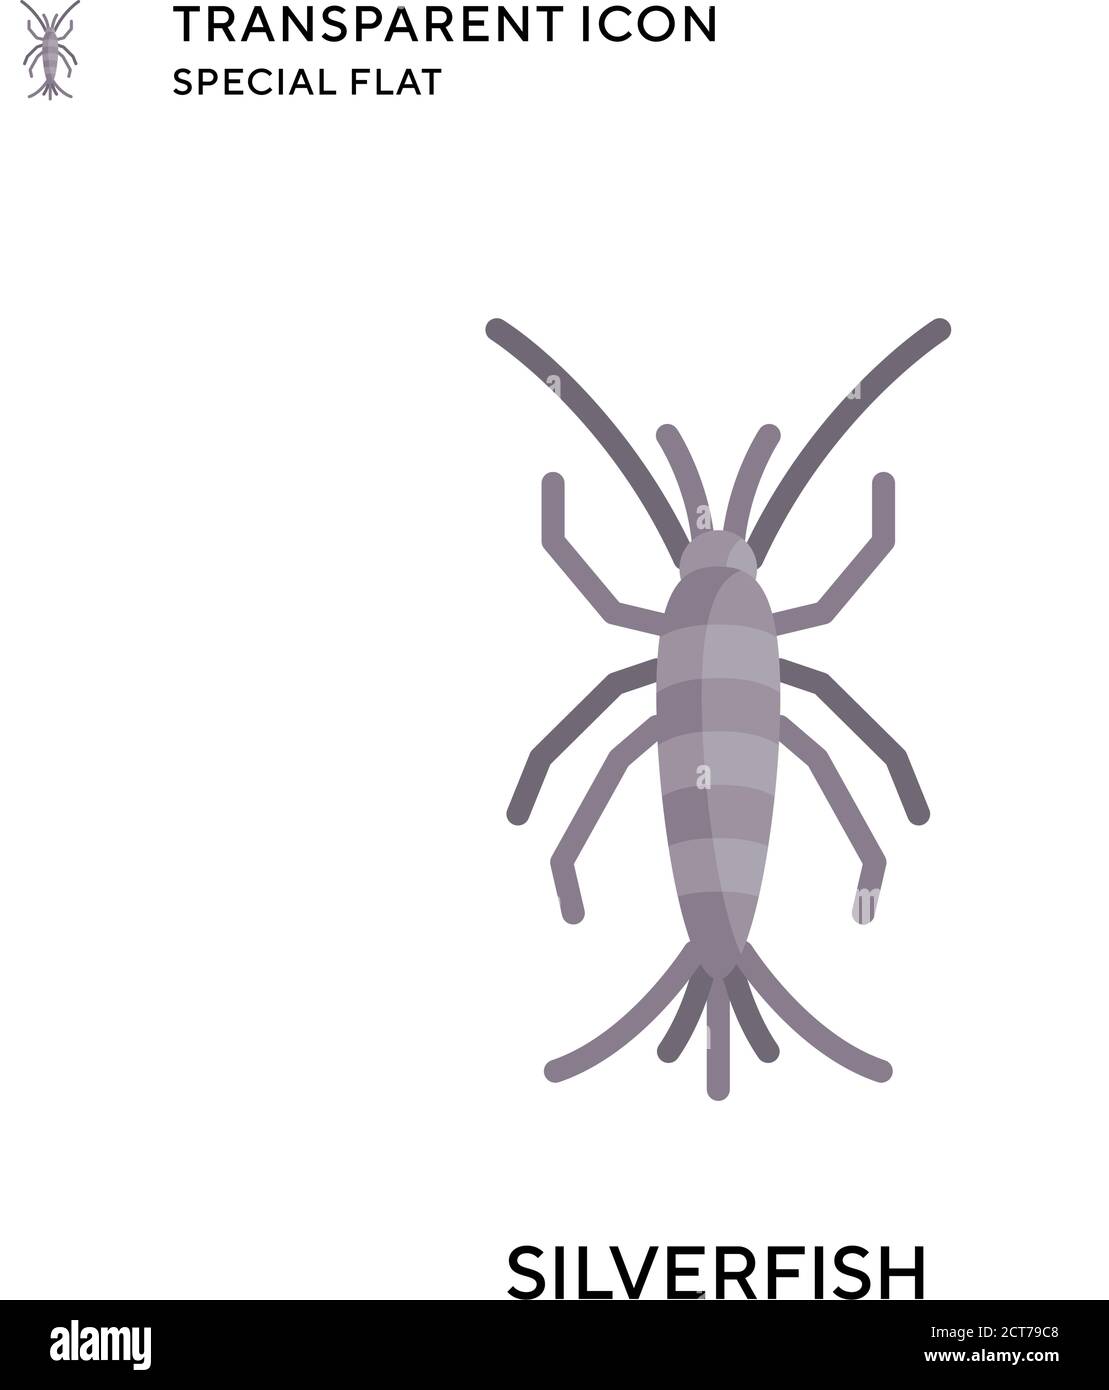 Silverfish vector icon. Flat style illustration. EPS 10 vector. Stock Vector